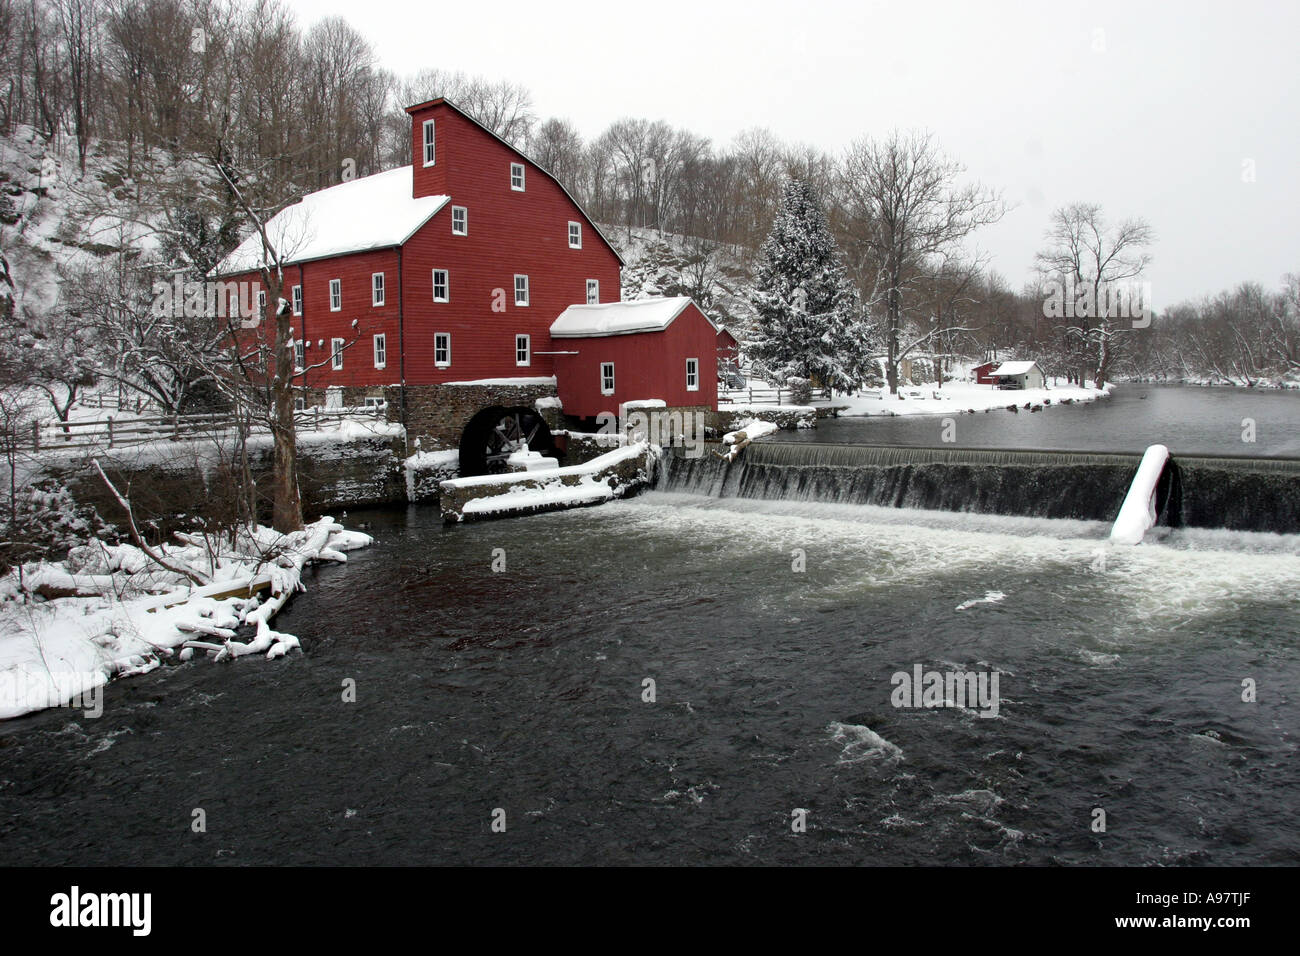 Clinton's landmark Red Mill, located in Hunterdon County, New Jersey USA Stock Photo